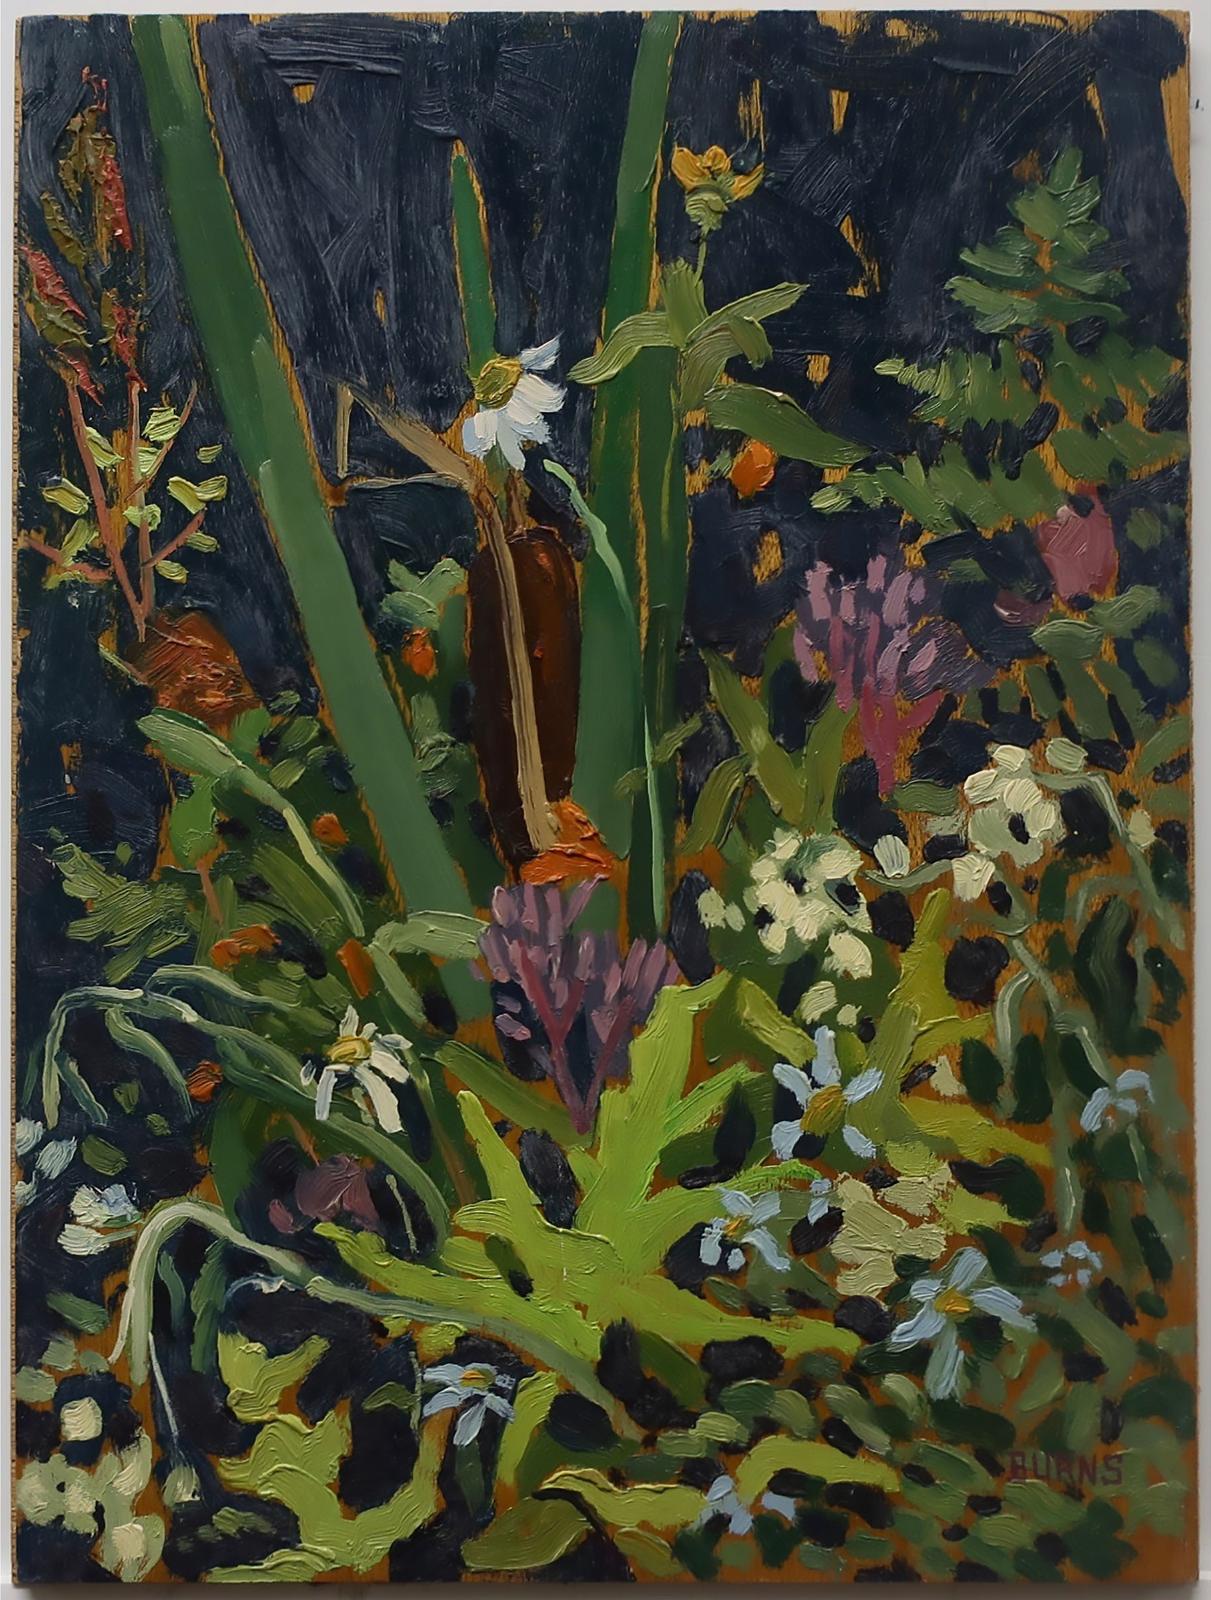 Bill Burns (1960) - Untitled (Wildflowers)